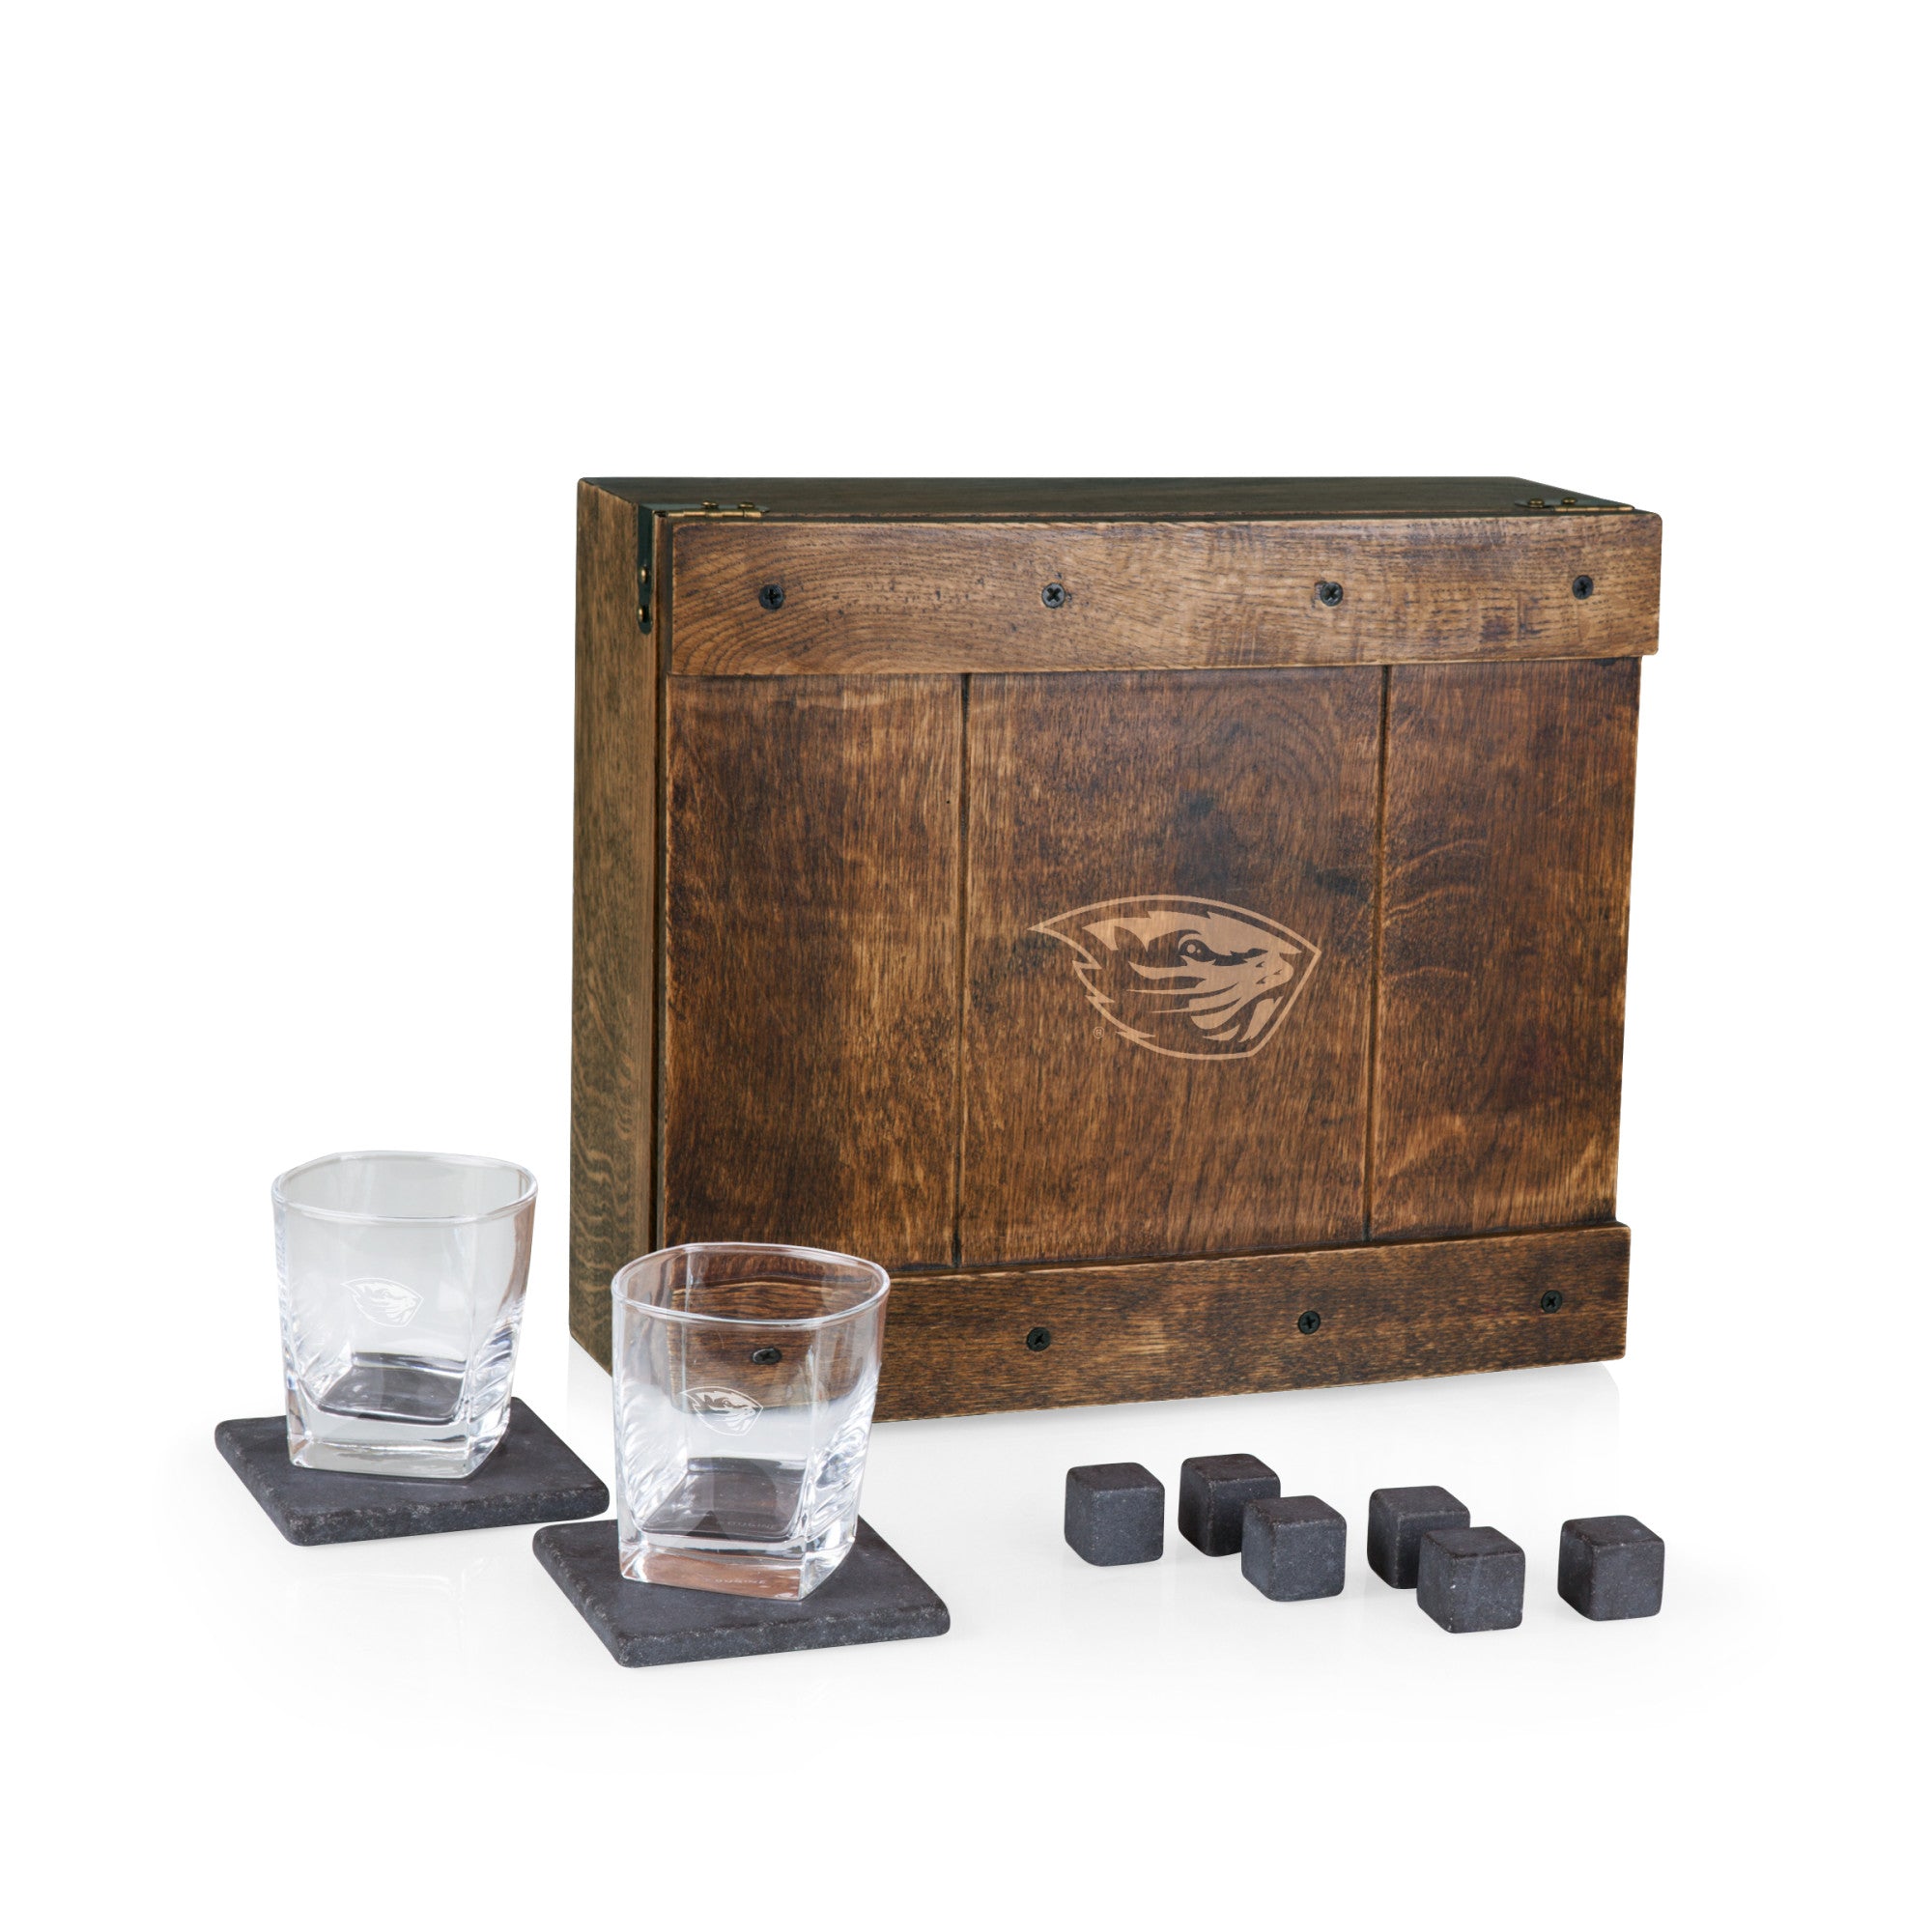 Oregon State Beavers - Whiskey Box Gift Set